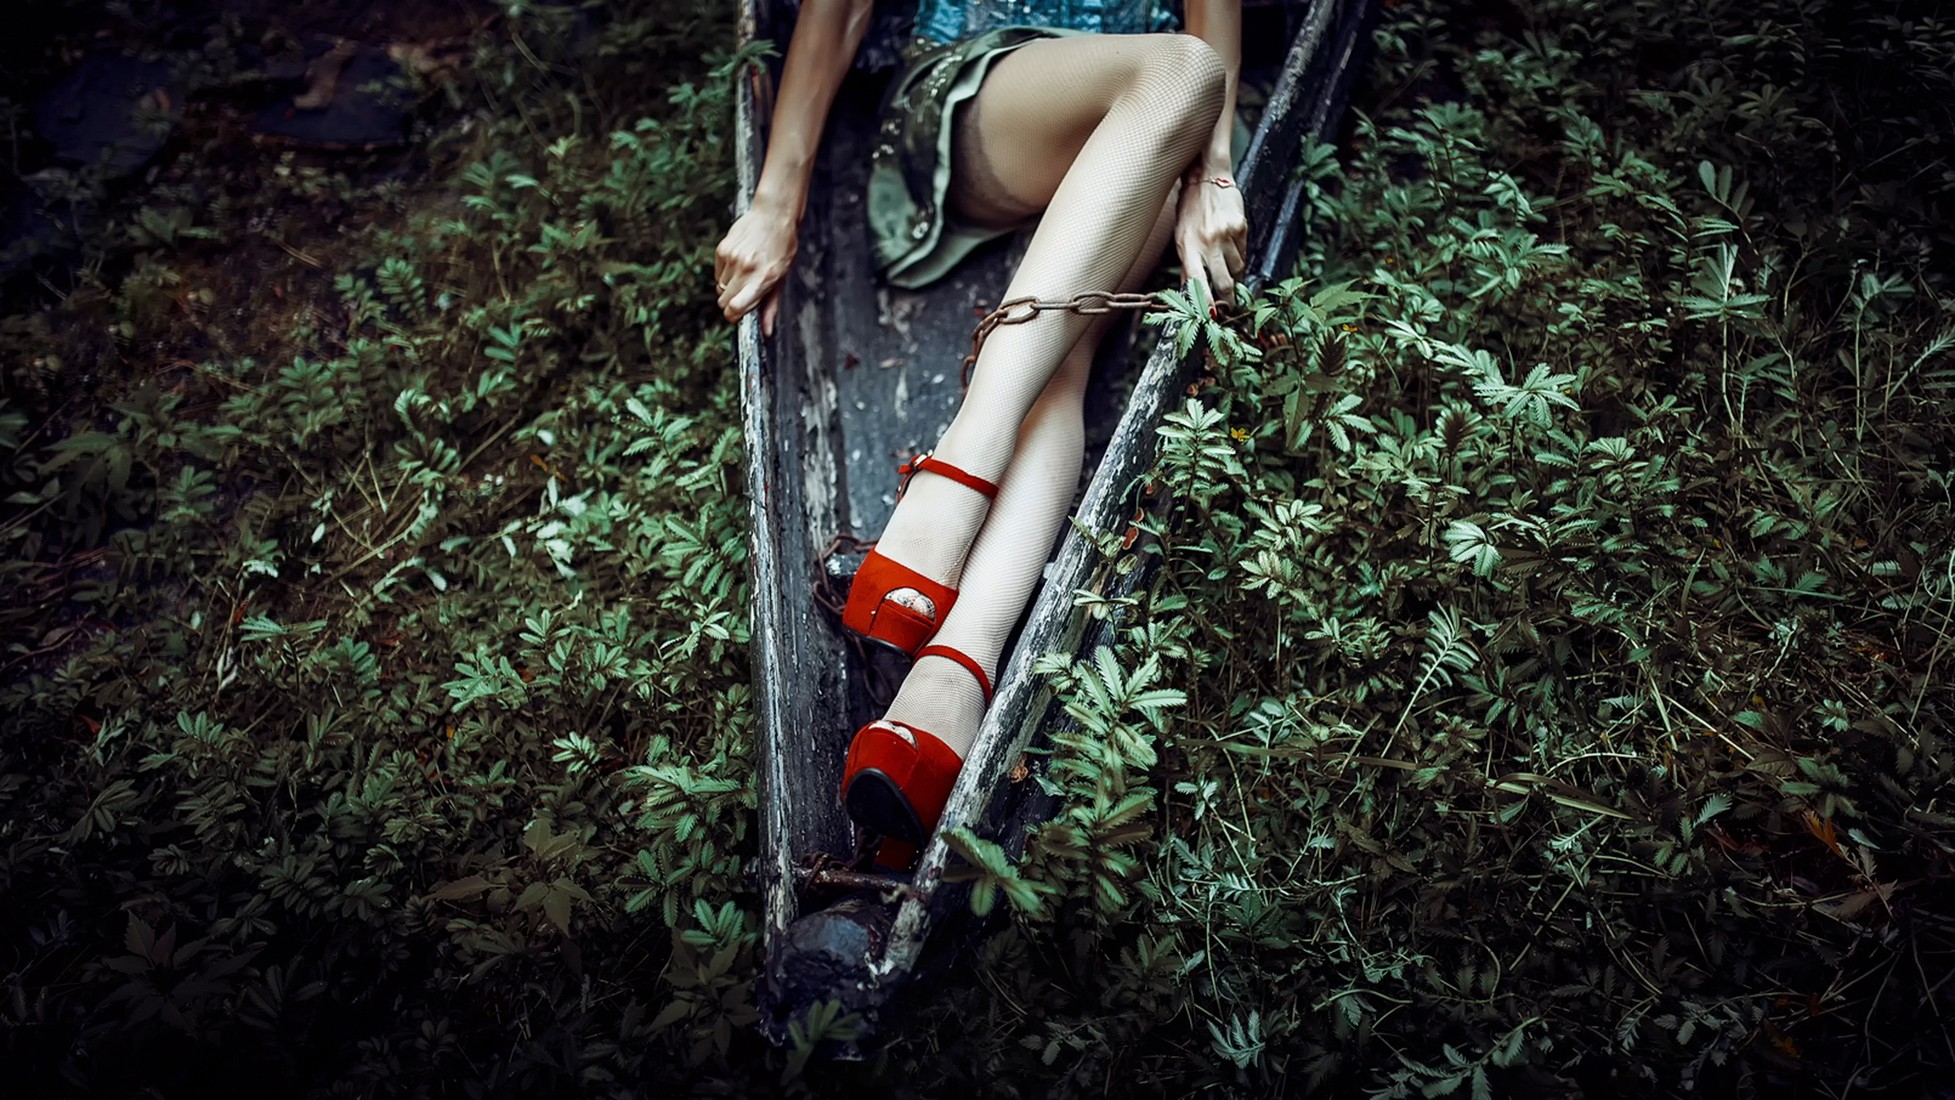 People 1955x1100 women fishnet stockings legs high heels red heels women outdoors heels plants